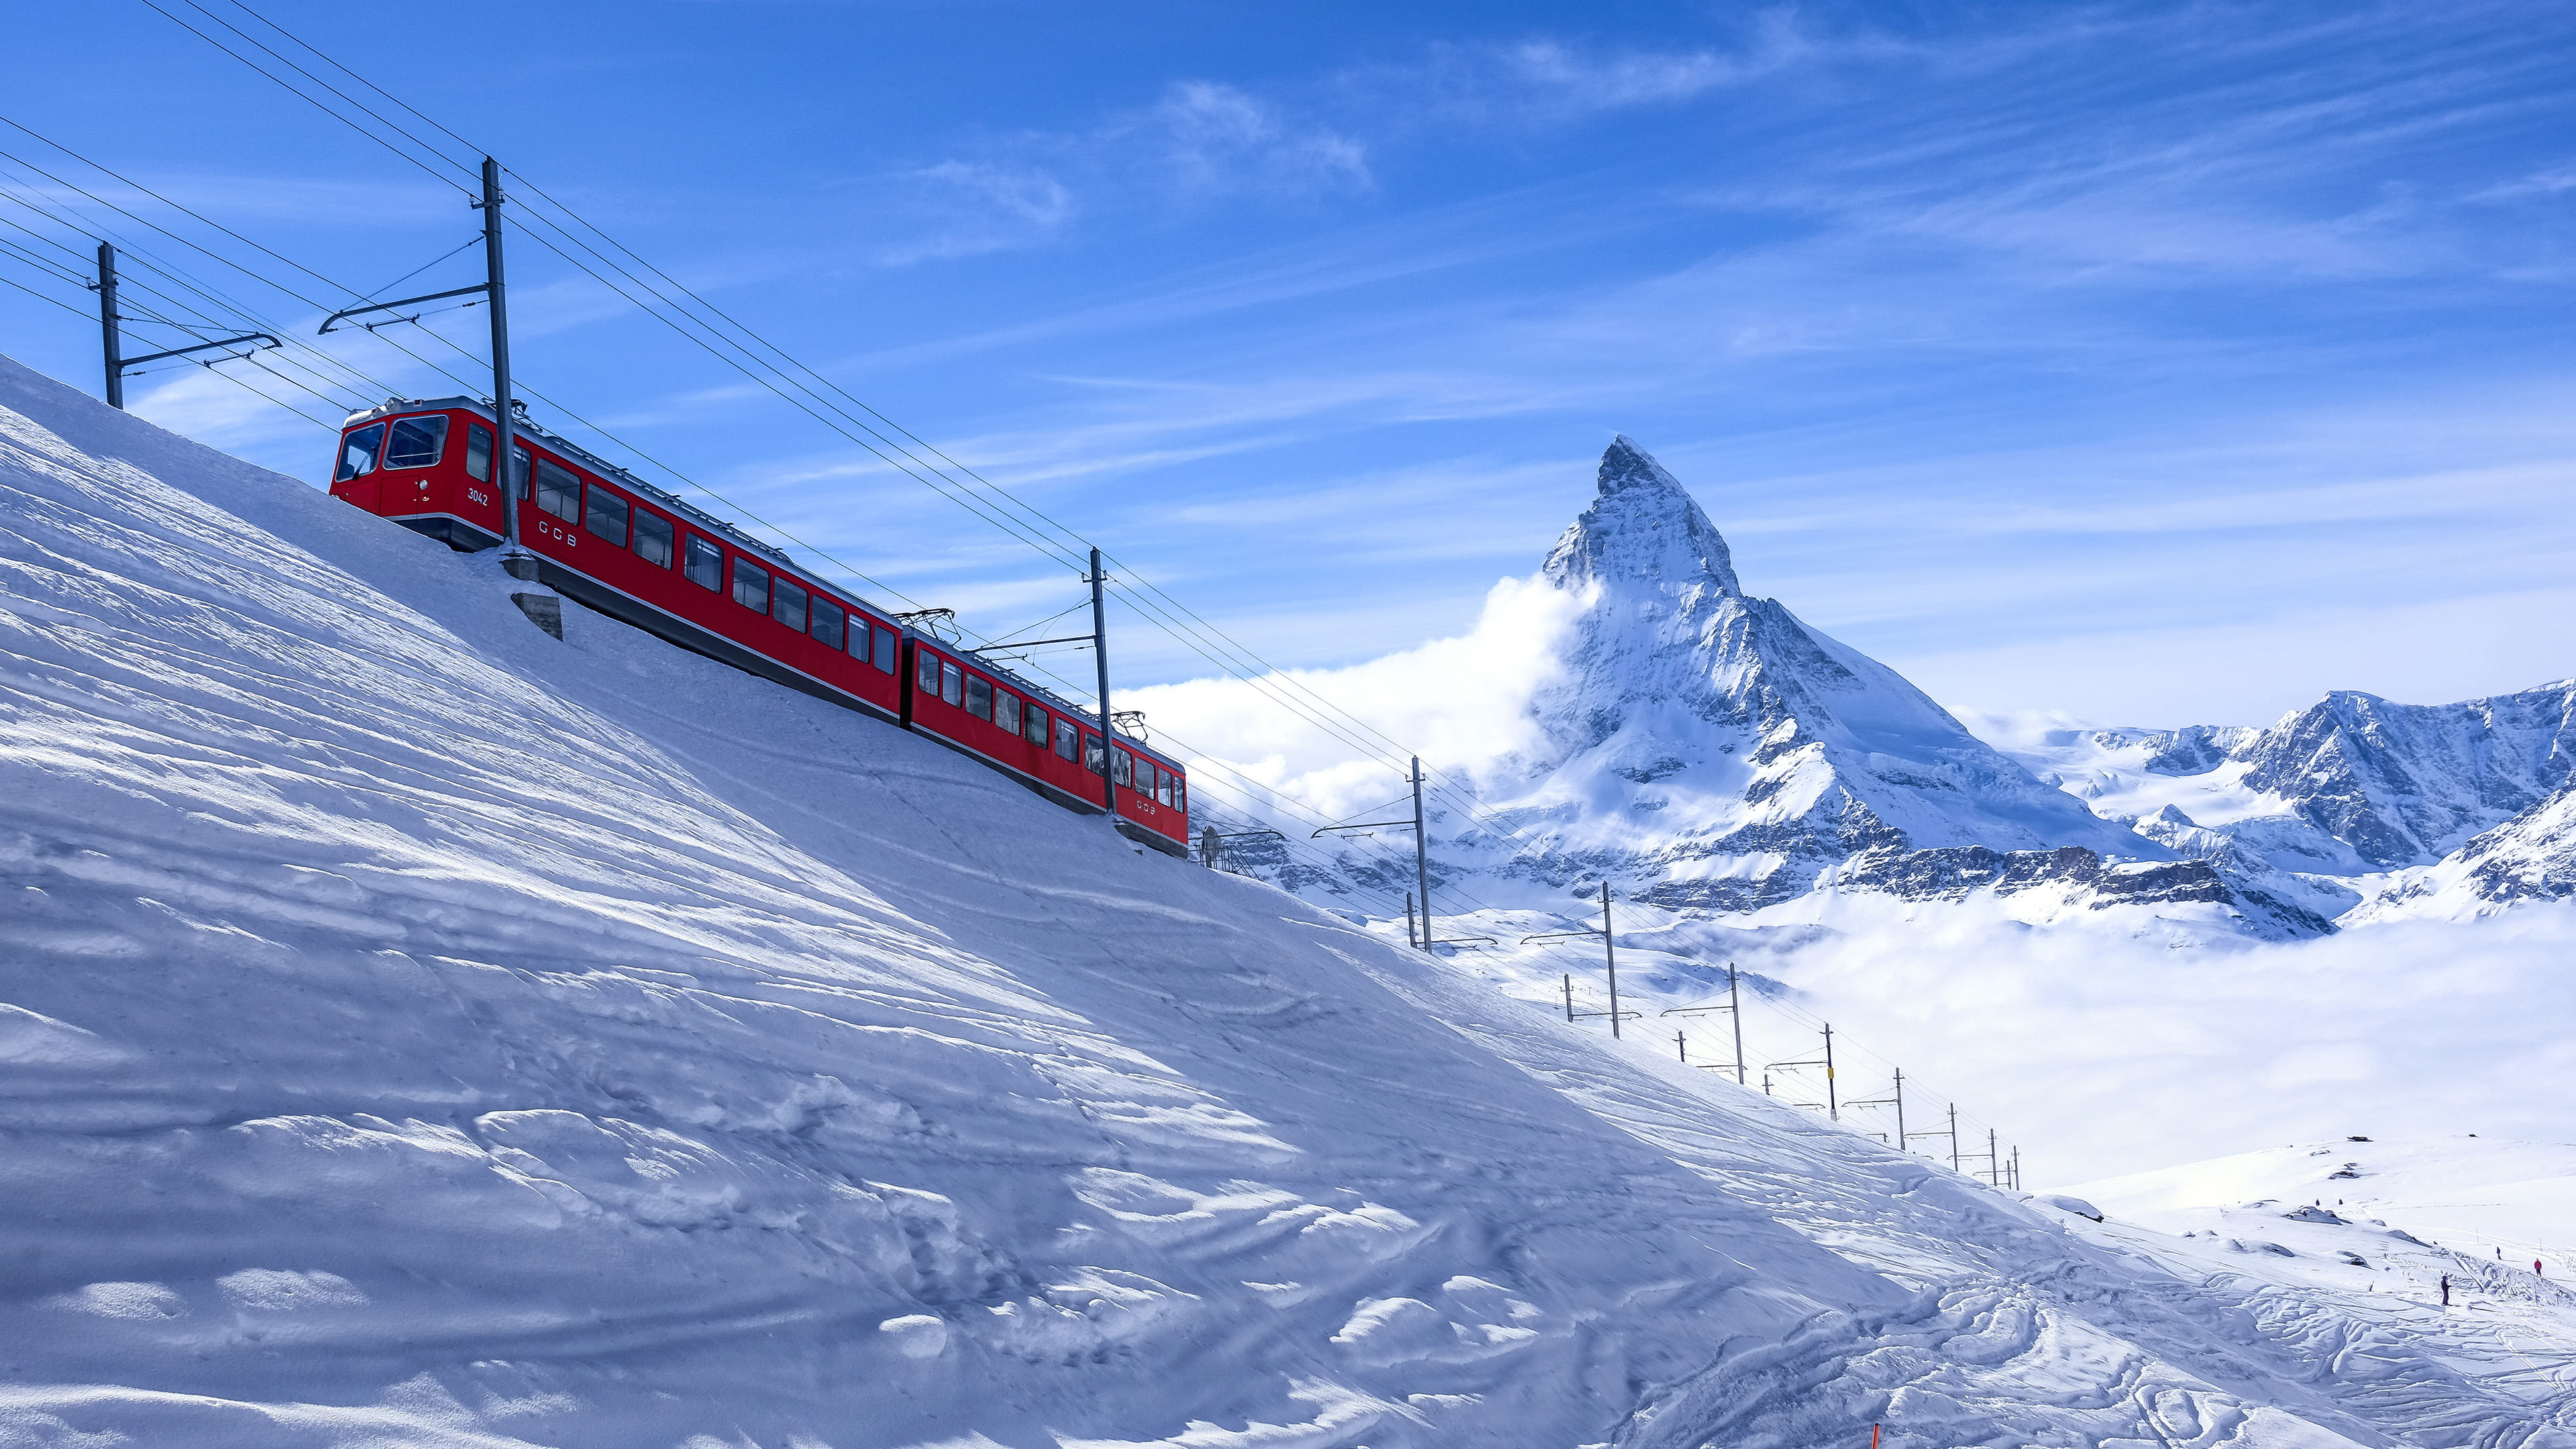 Matterhorn, train, snow, clouds, Switzerland, Alps, landscape